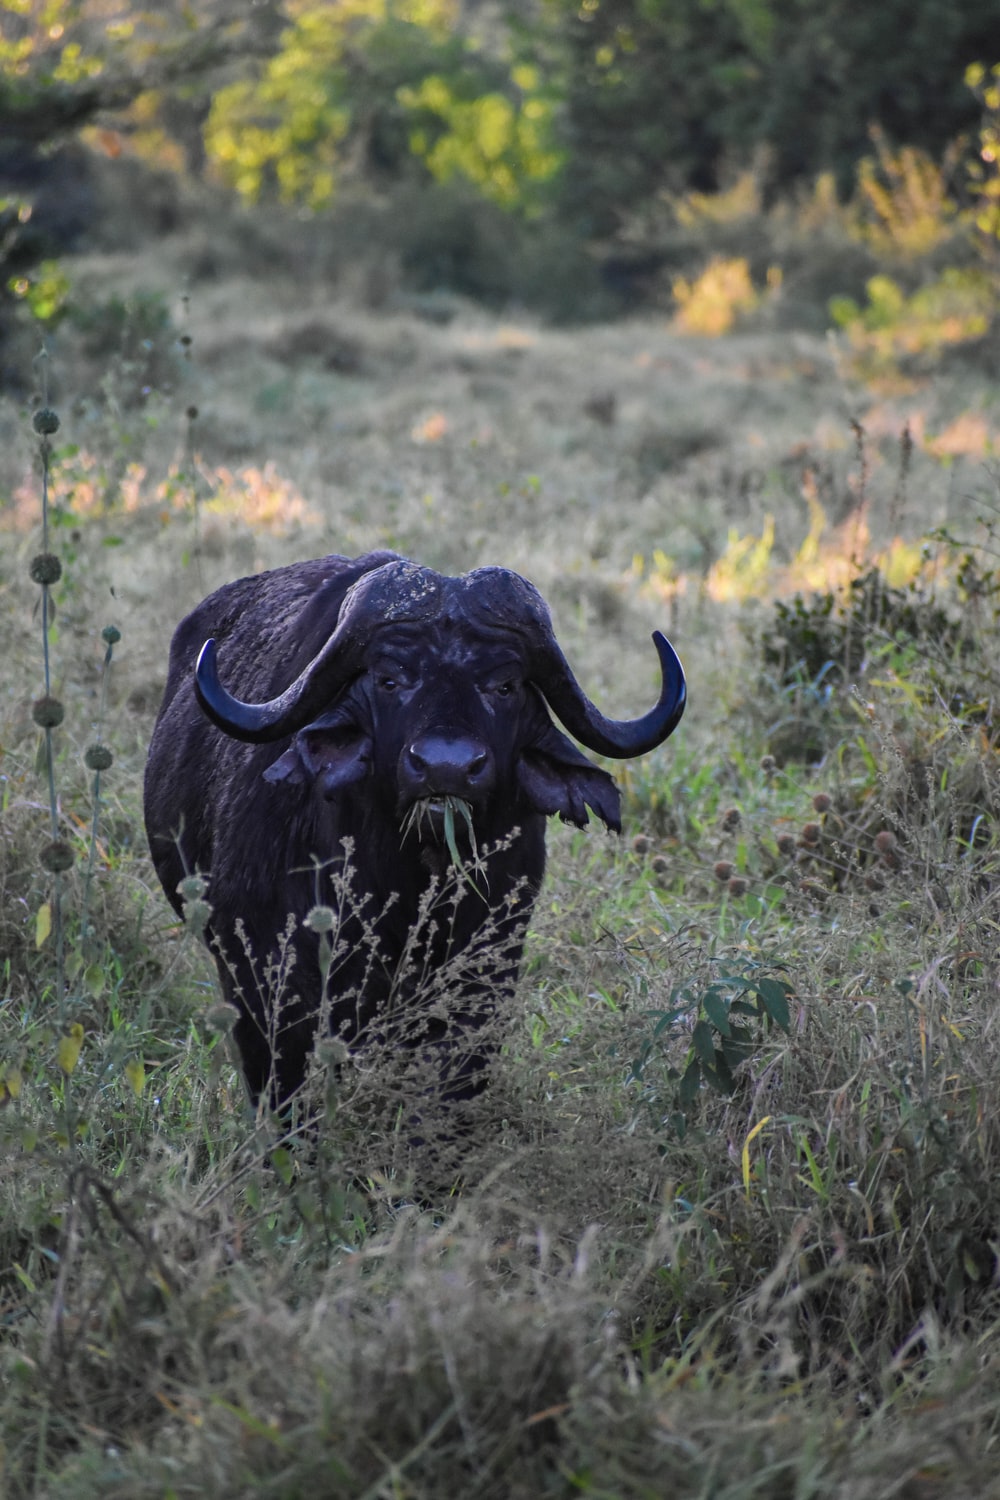 Cape Buffalo Picture. Download Free Image